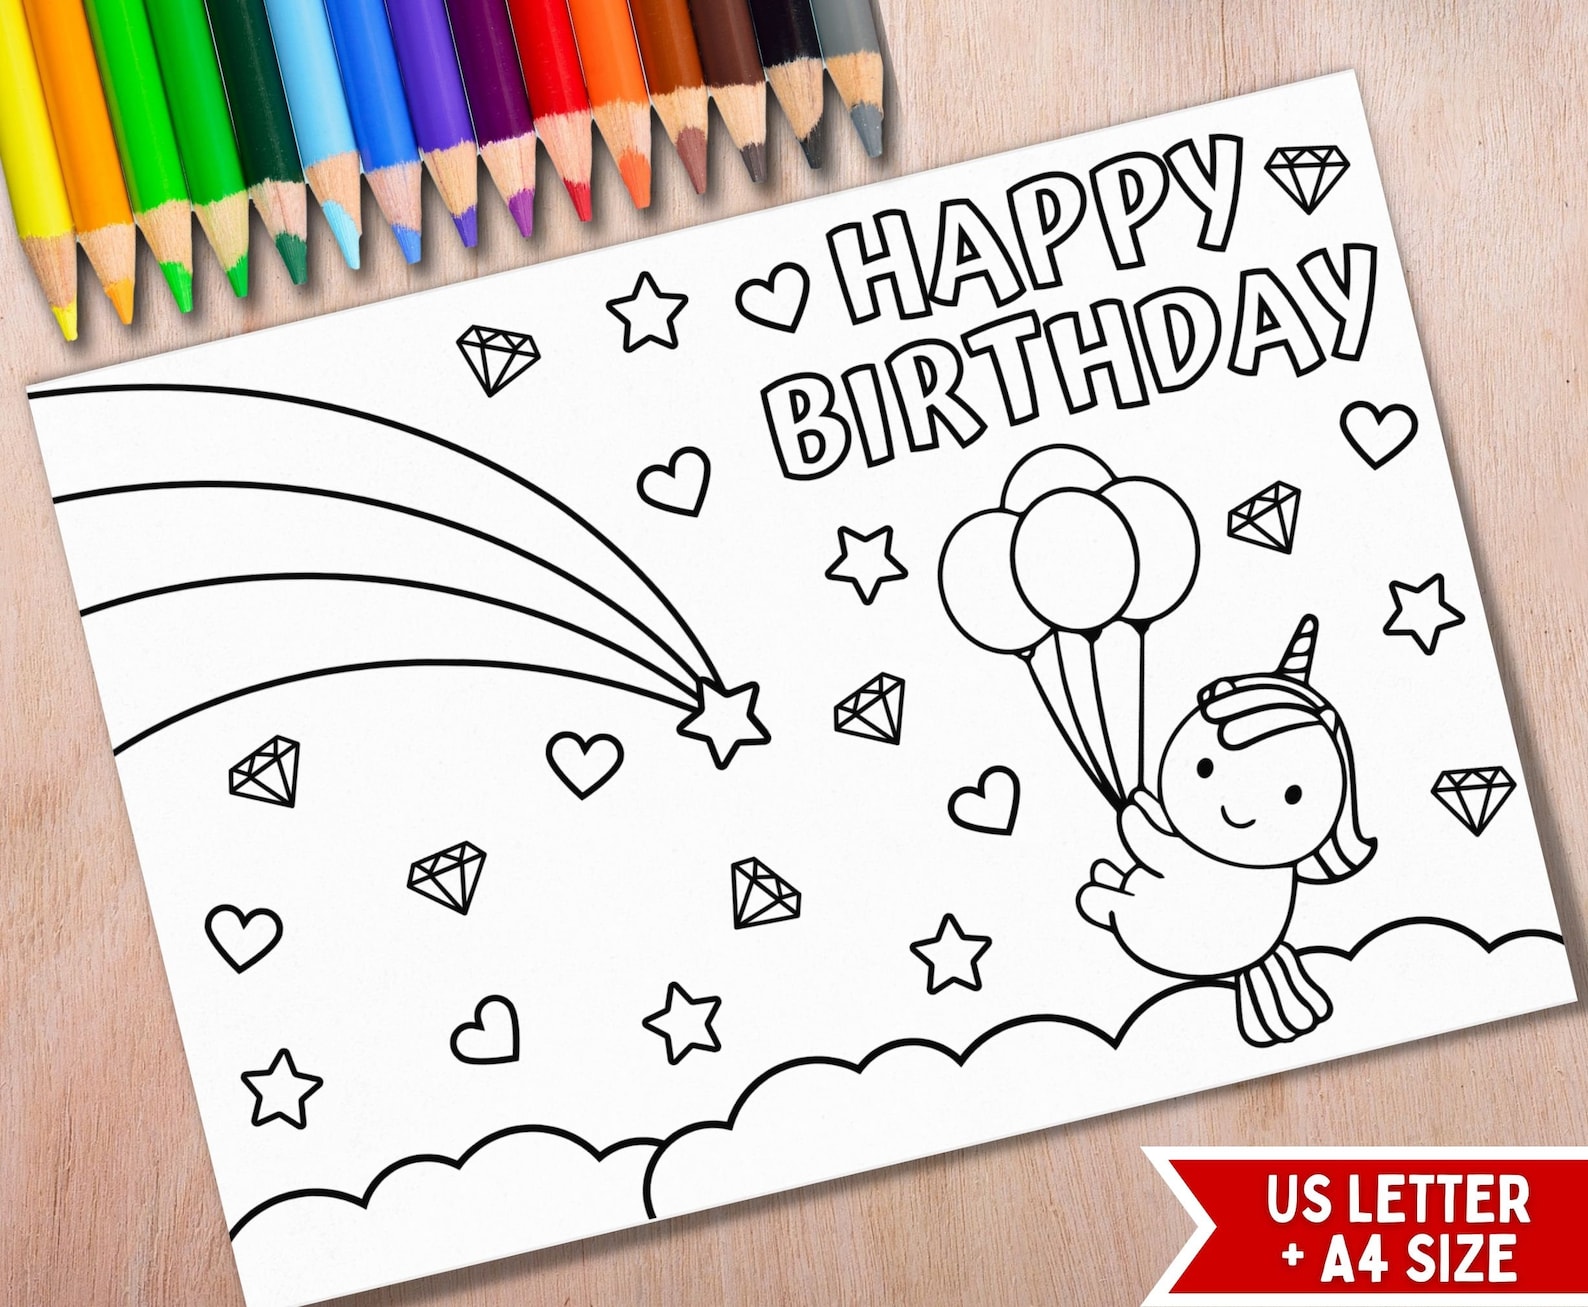 unicorn coloring birthday card printable happy birthday card etsy